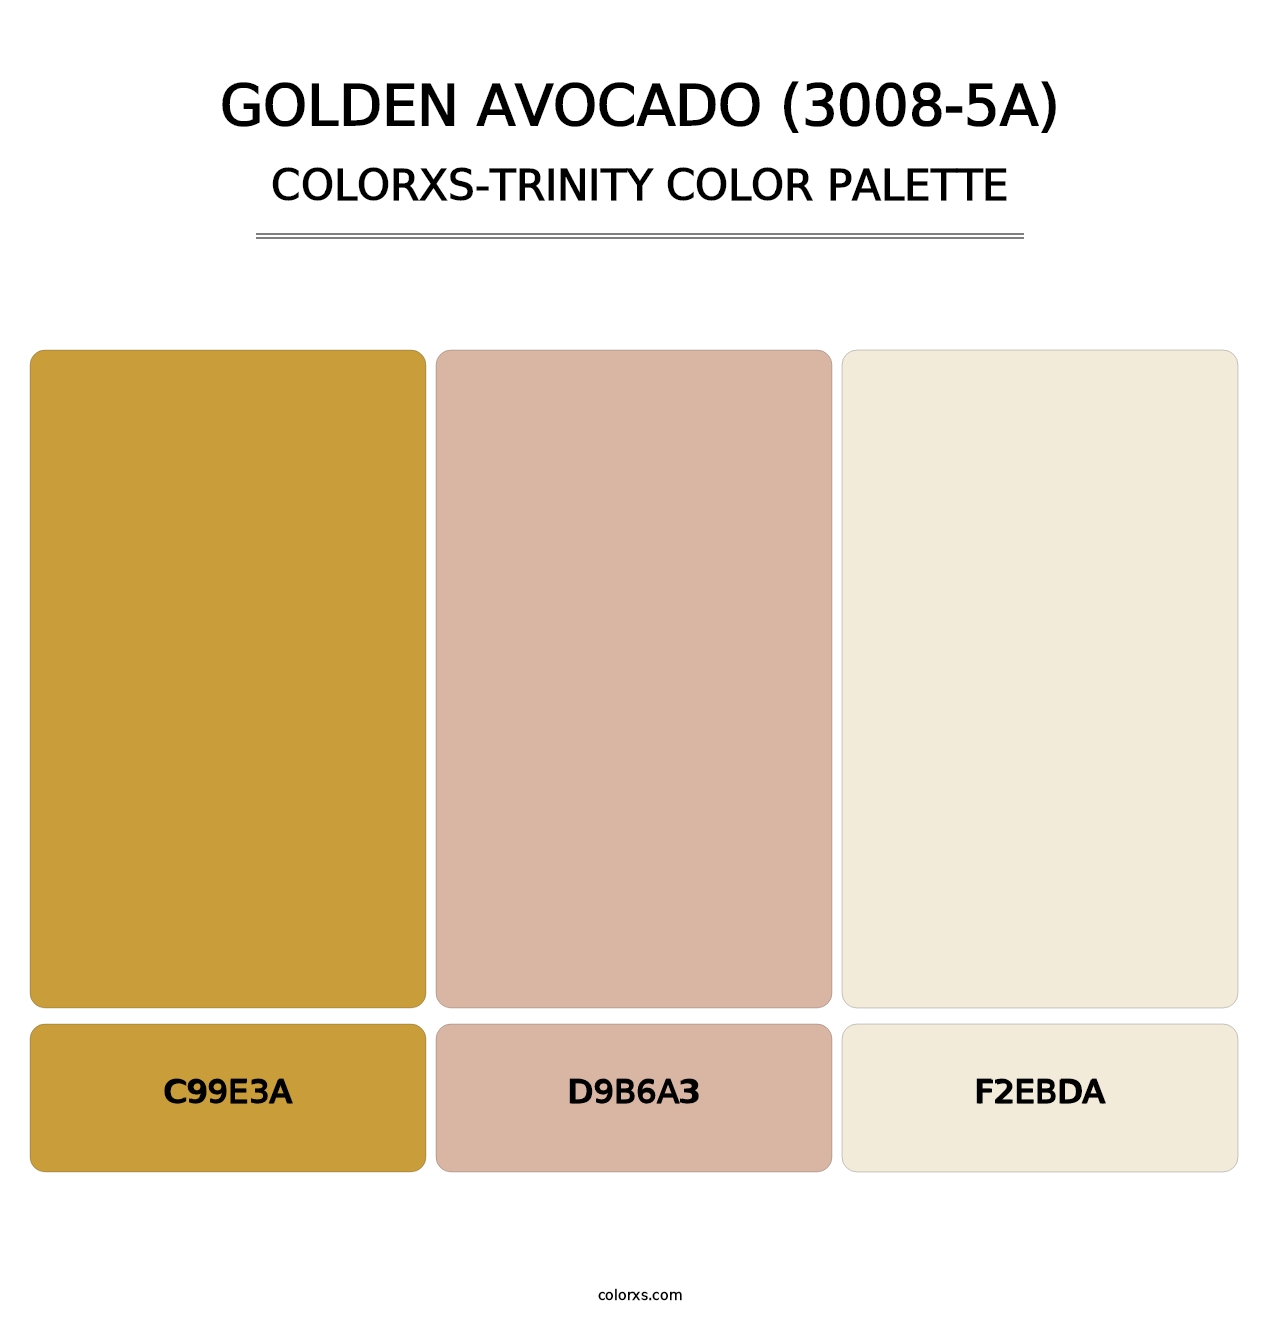 Golden Avocado (3008-5A) - Colorxs Trinity Palette